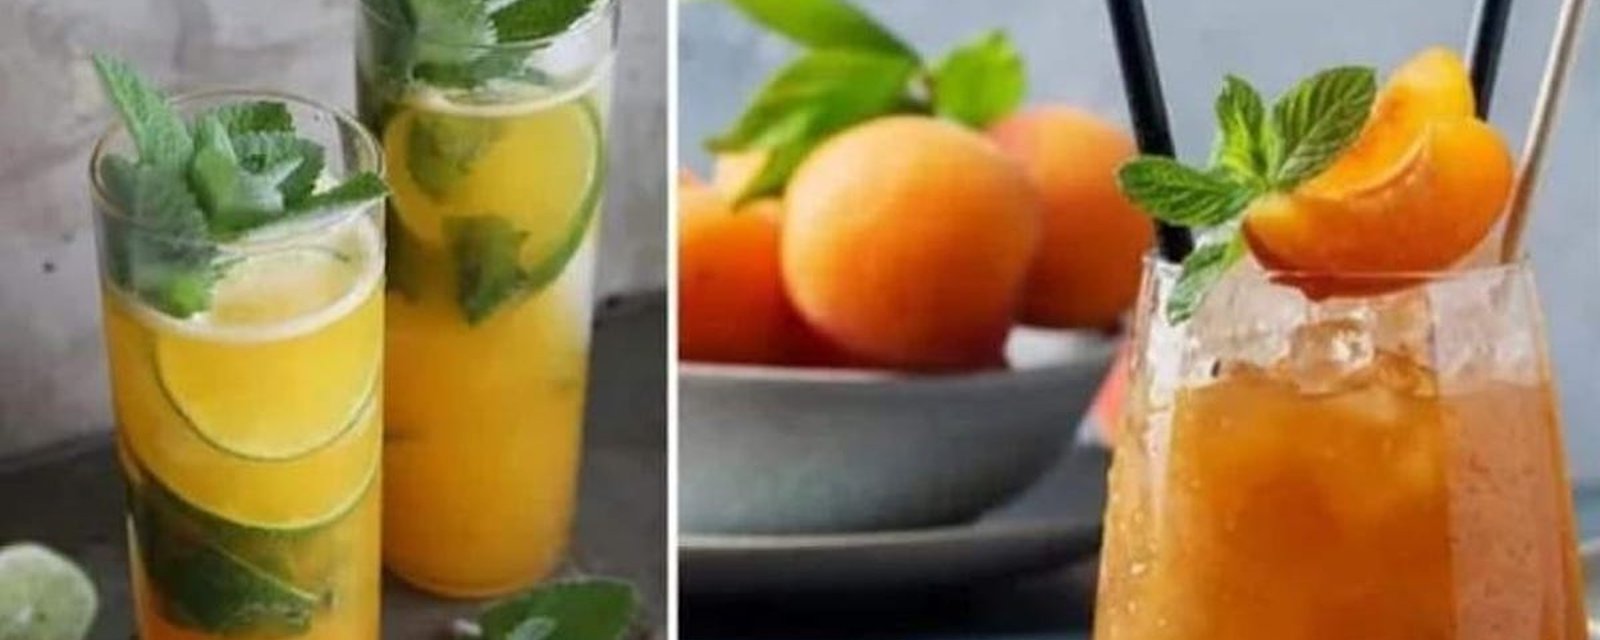 On attire le printemps avec ce mojito lime et abricot!